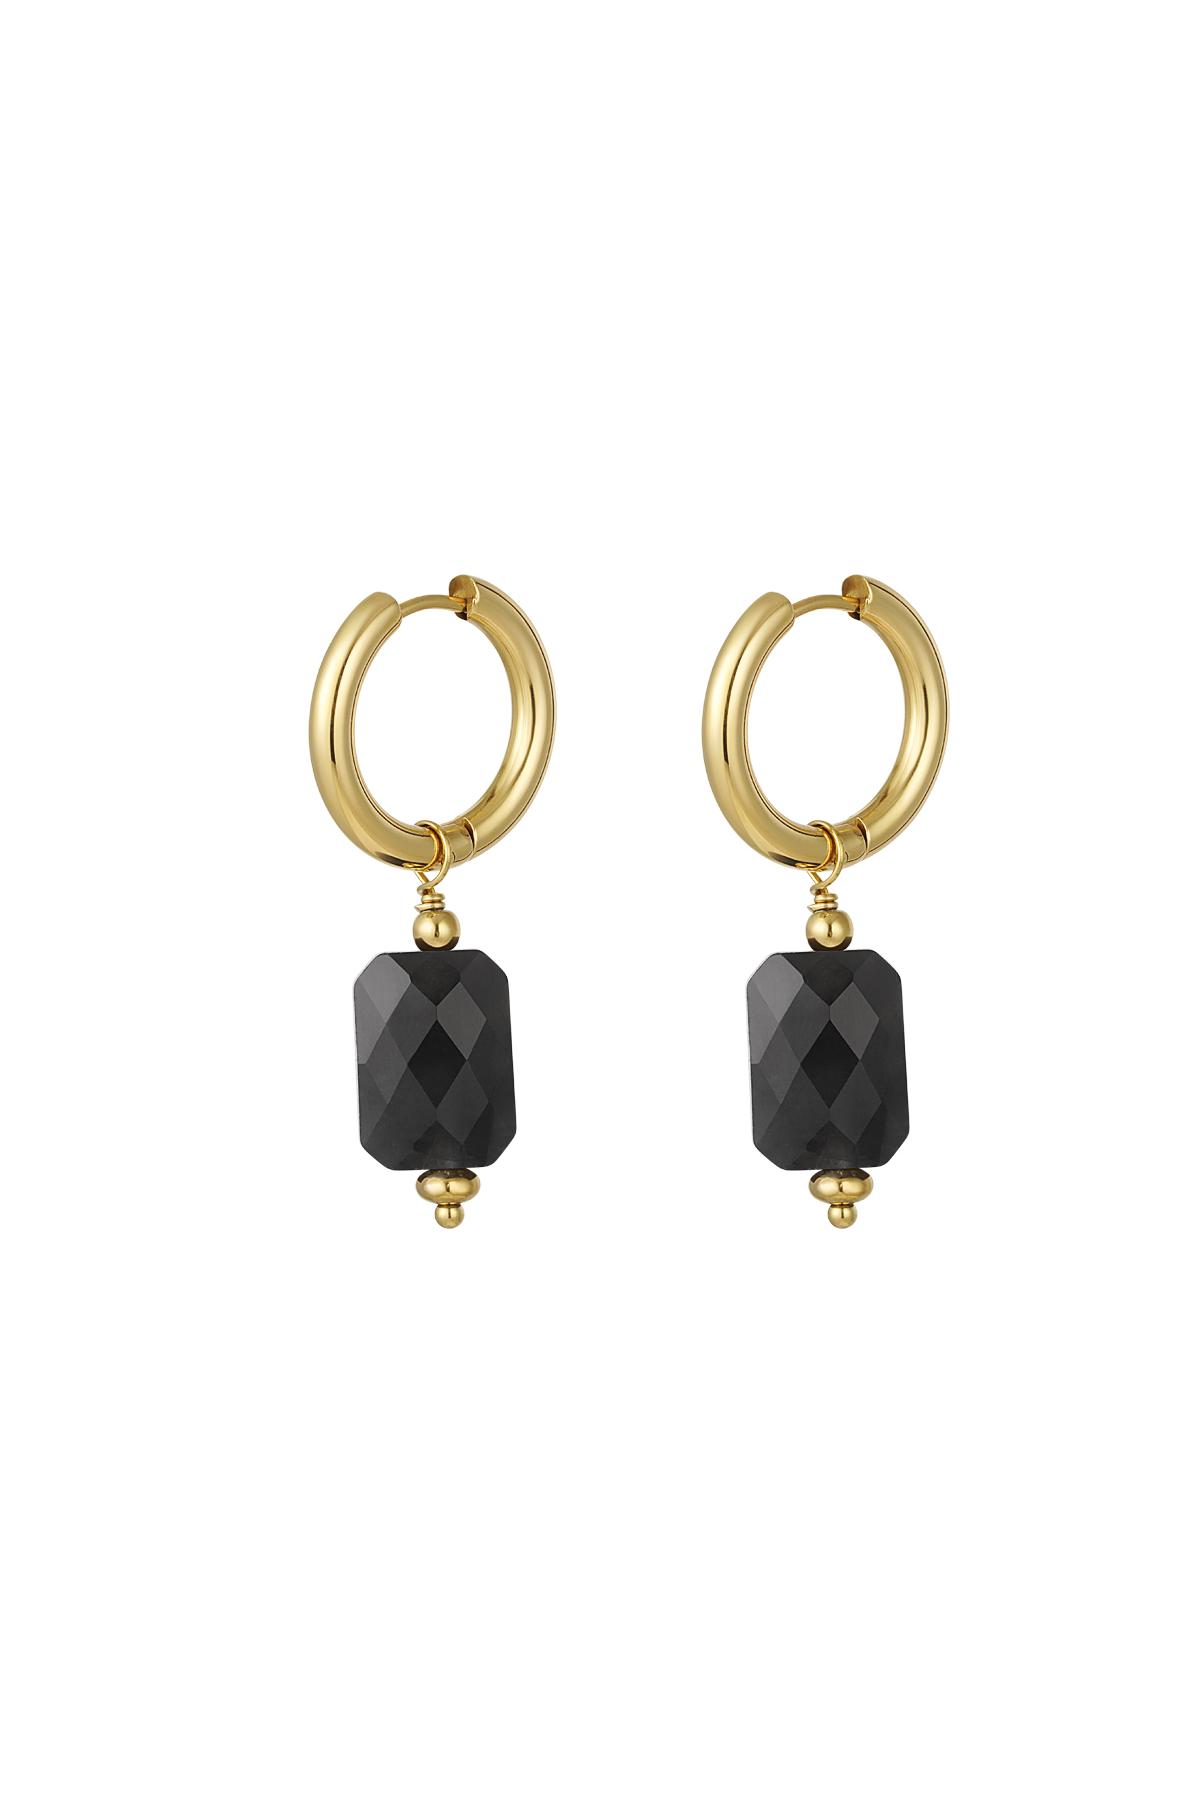 Earrings with rectangular pendant Black & Gold Stainless Steel 